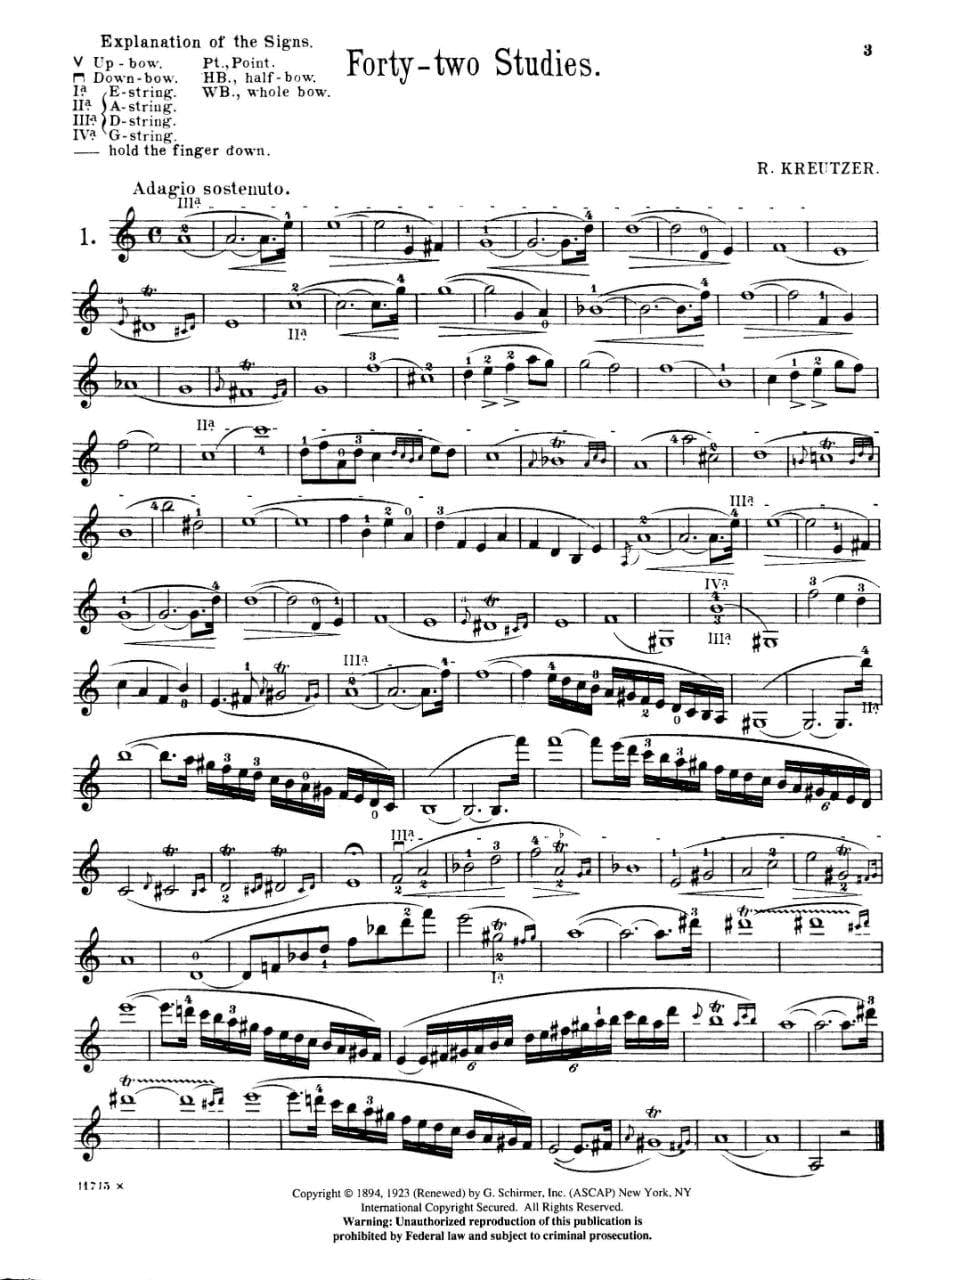 Kreutzer, Rodolphe - 42 Studies or Caprices - Violin solo - edited by Edmund Singer - G Schirmer Edition